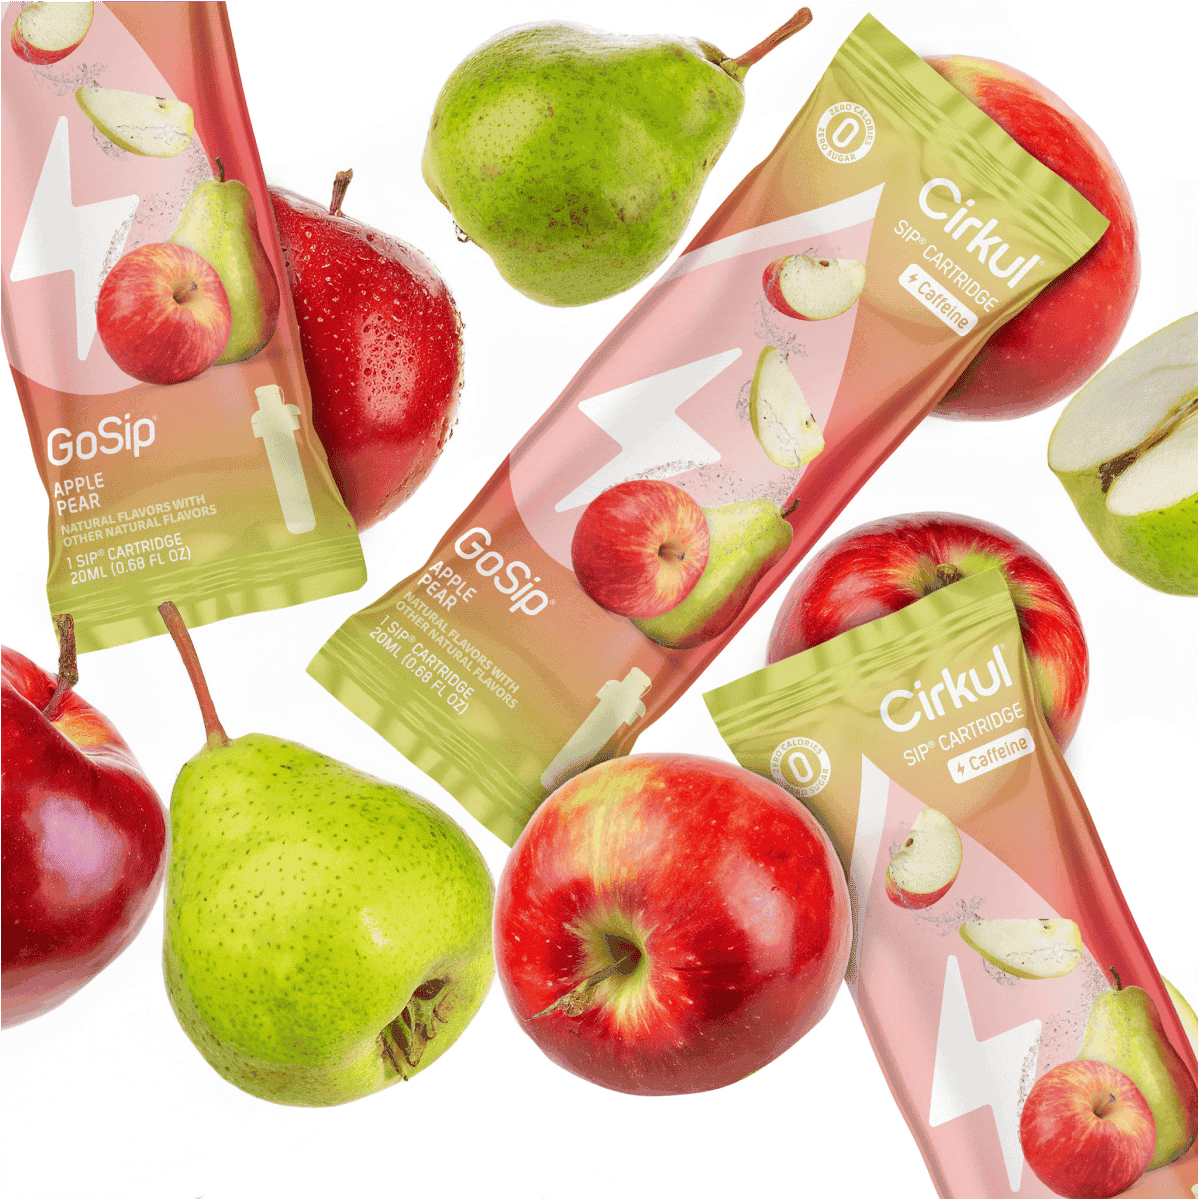 GoSip Apple Pear